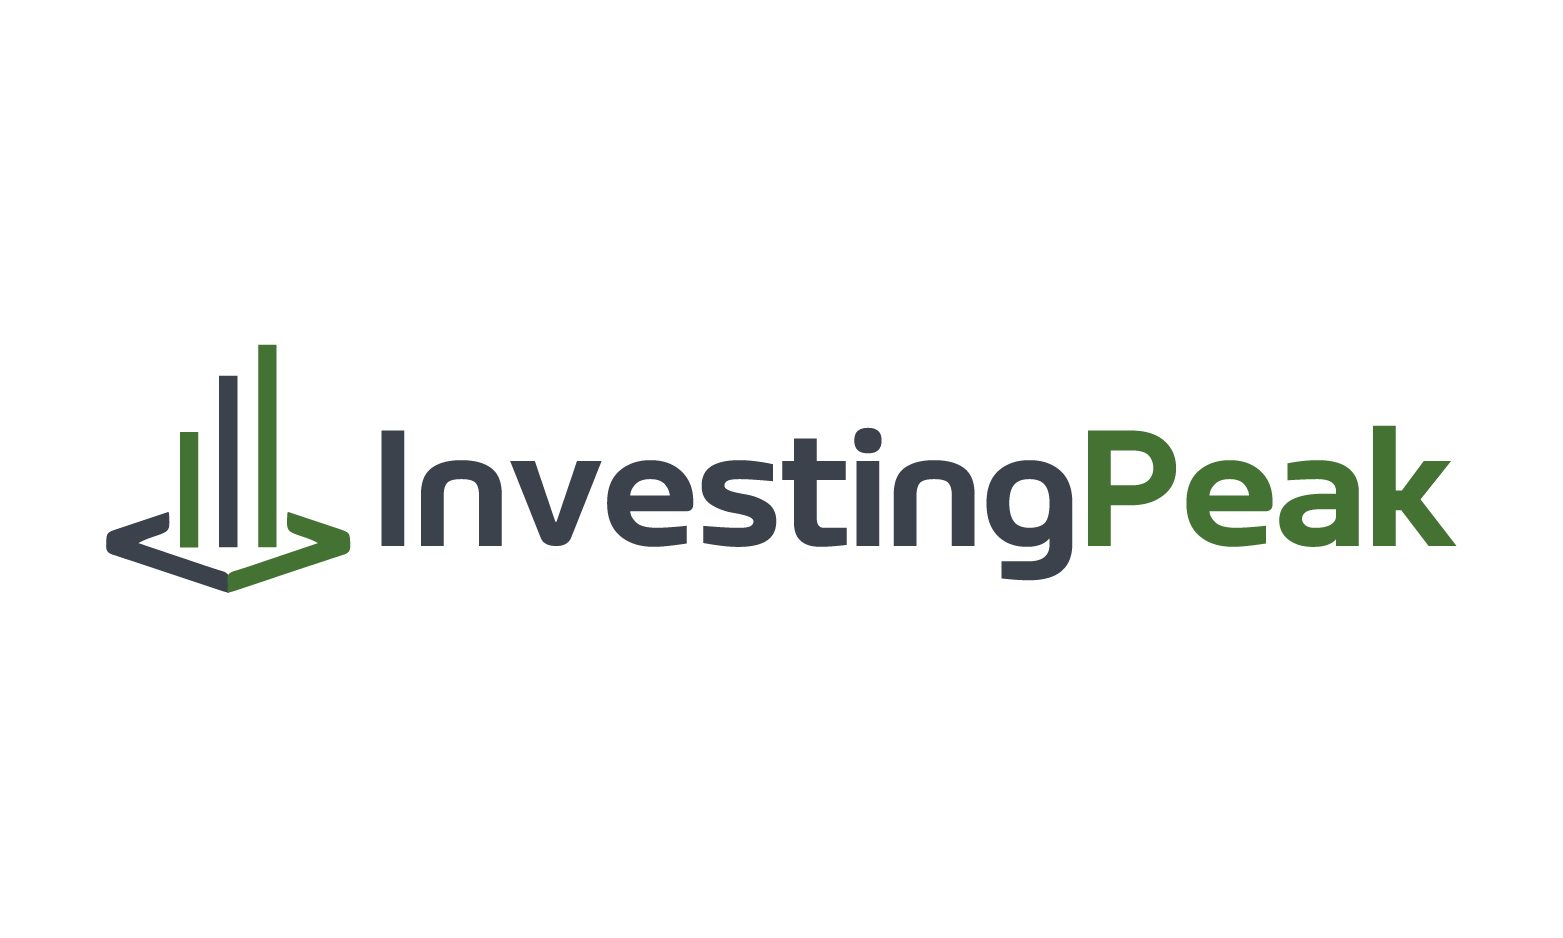 InvestingPeak.com - Creative brandable domain for sale